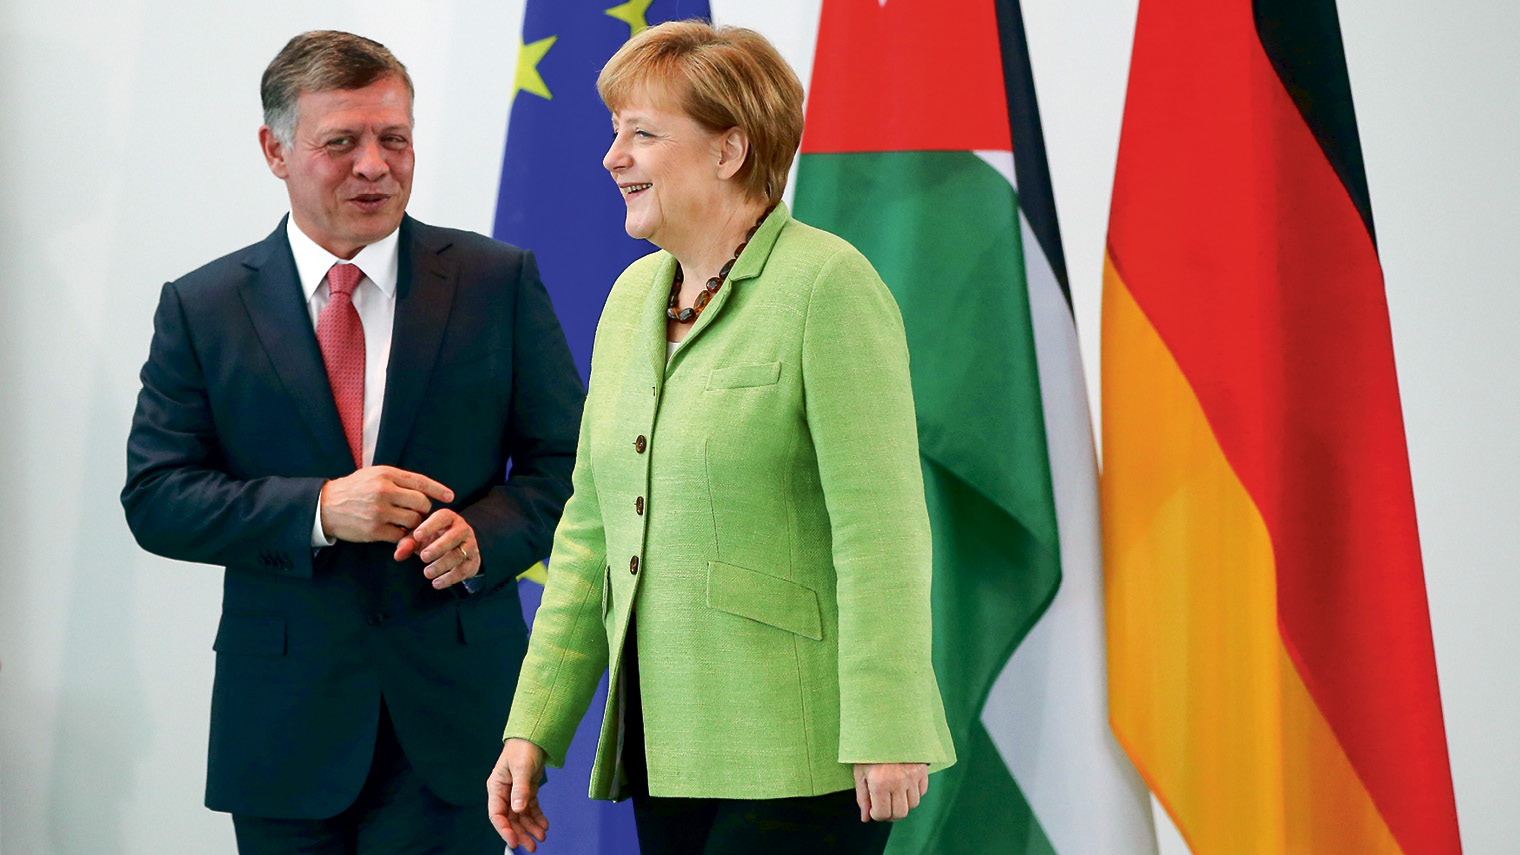 King Abdullah II with German chancellor Angela Merkel at a meeting in June 2014